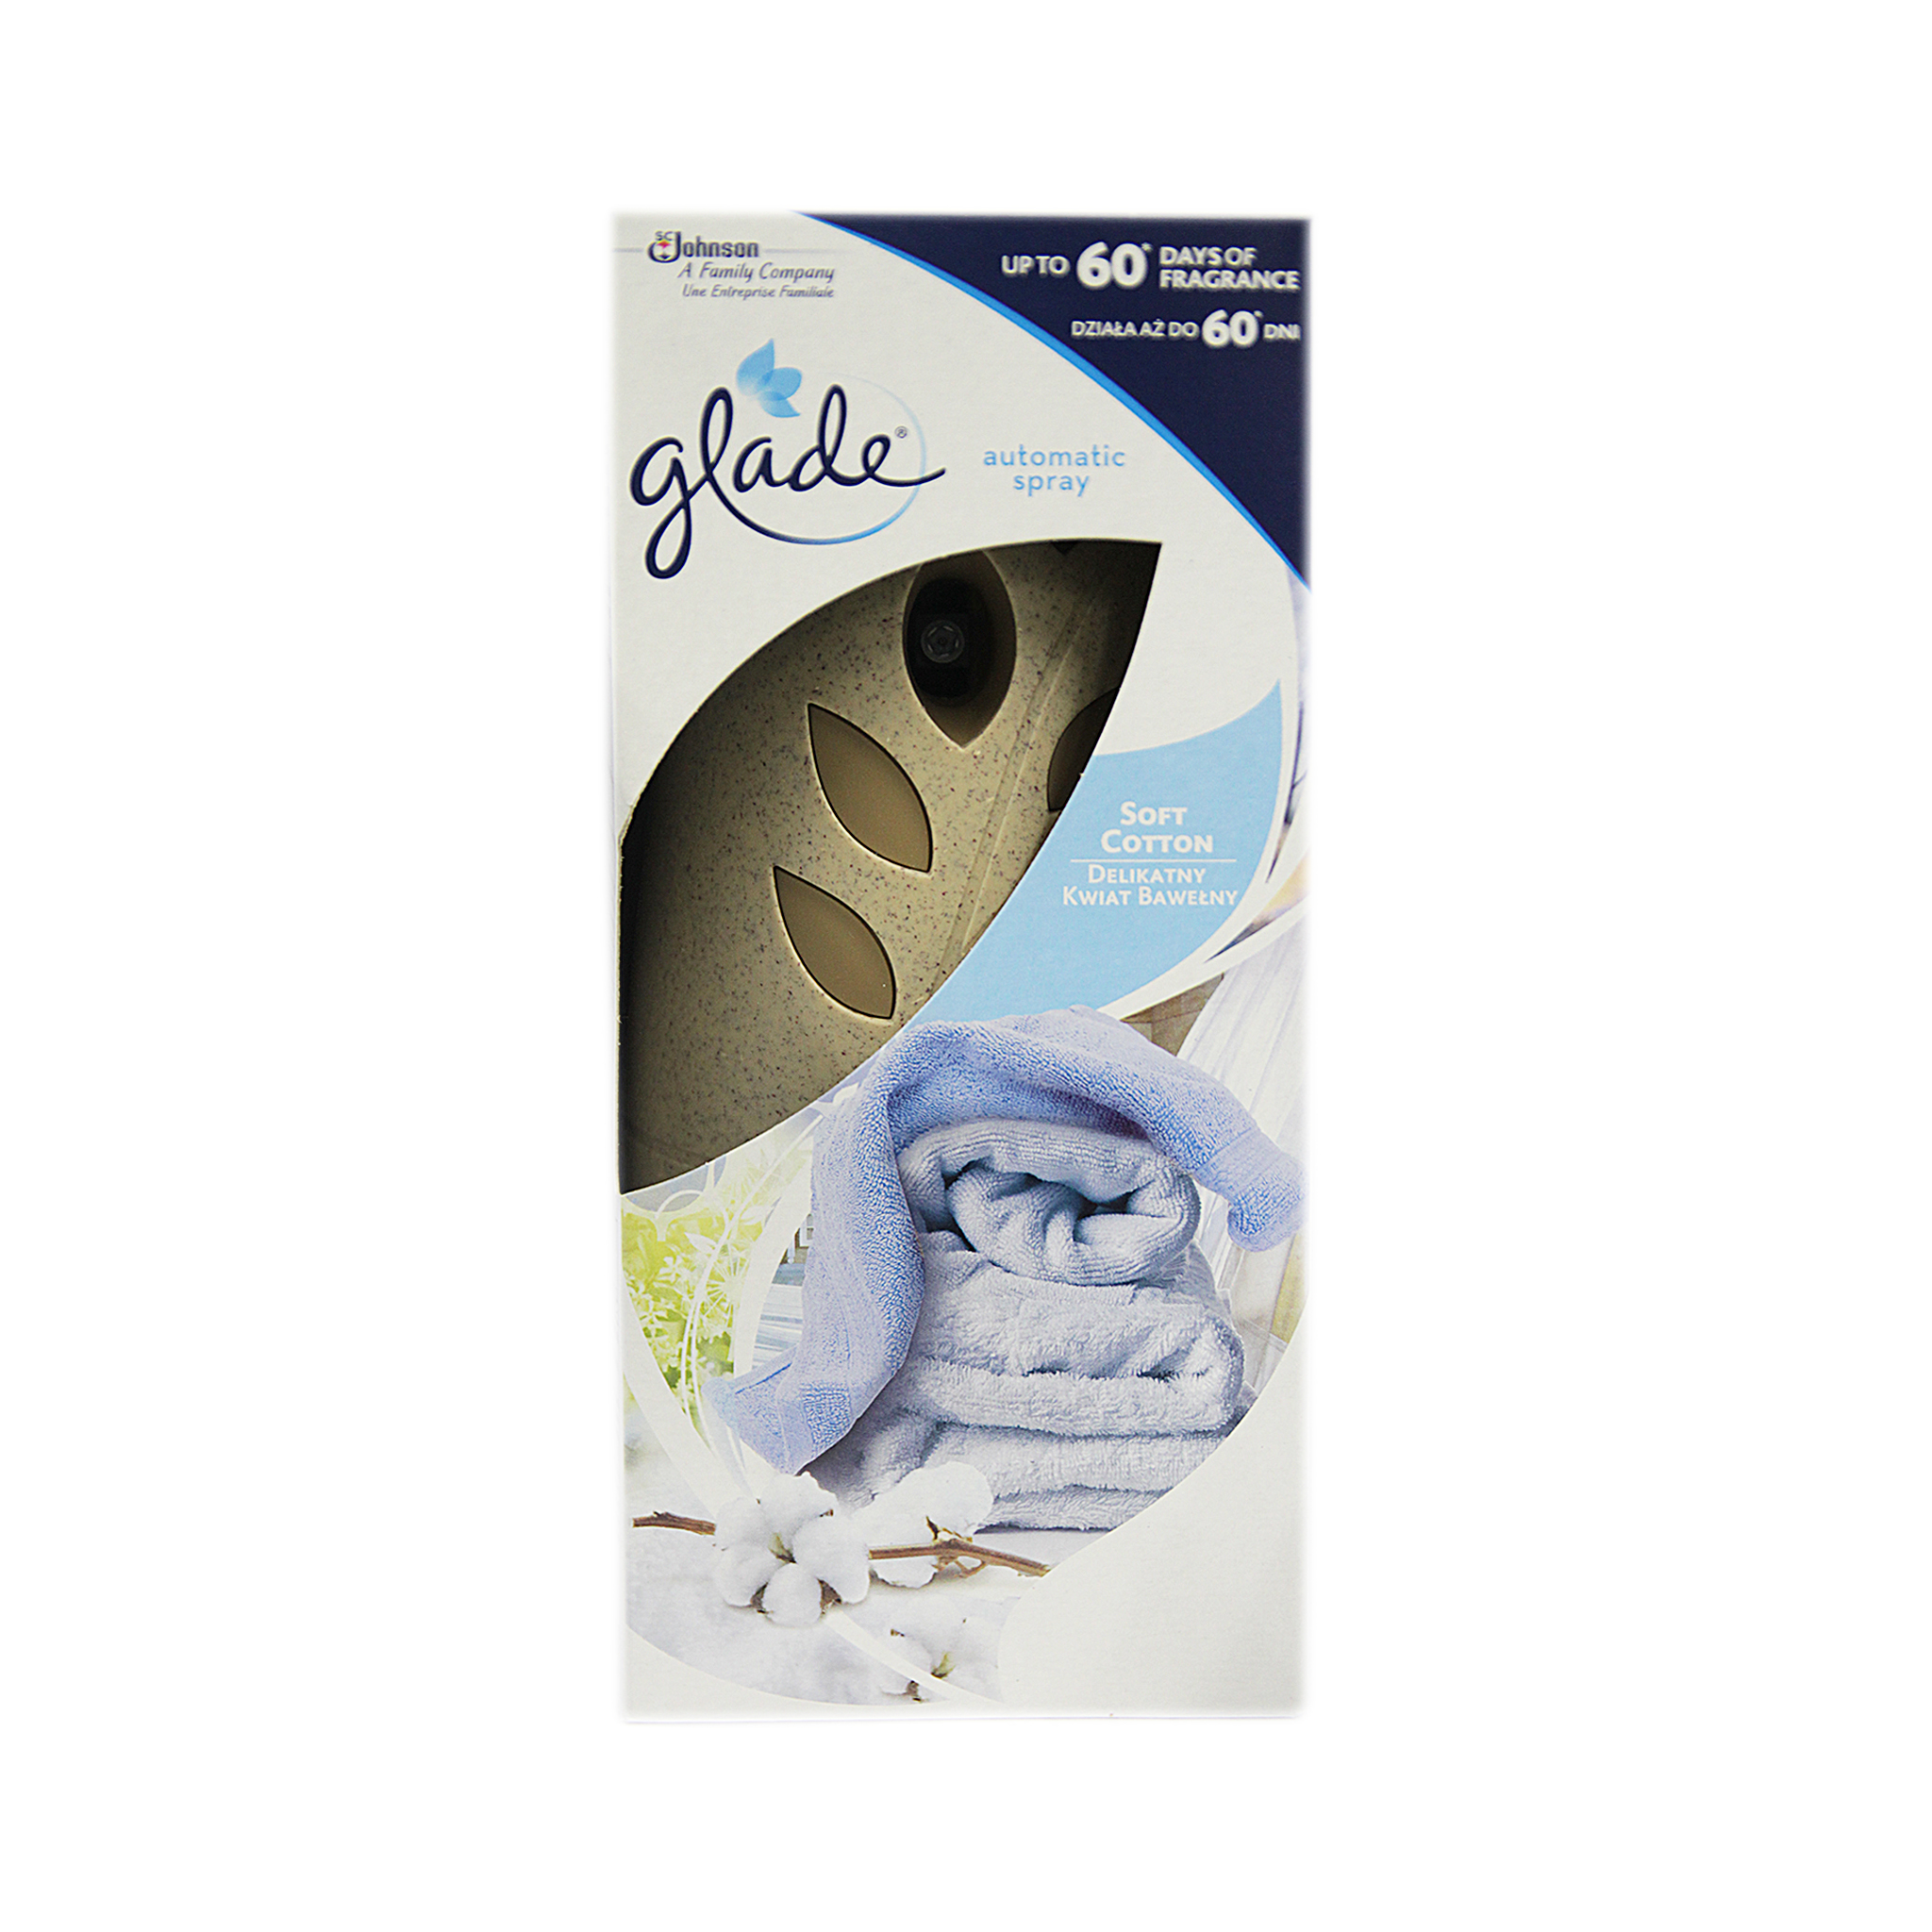 Glade Auto Spray Holder Soft Cotton 269ml - Jollys Pharmacy Online Store